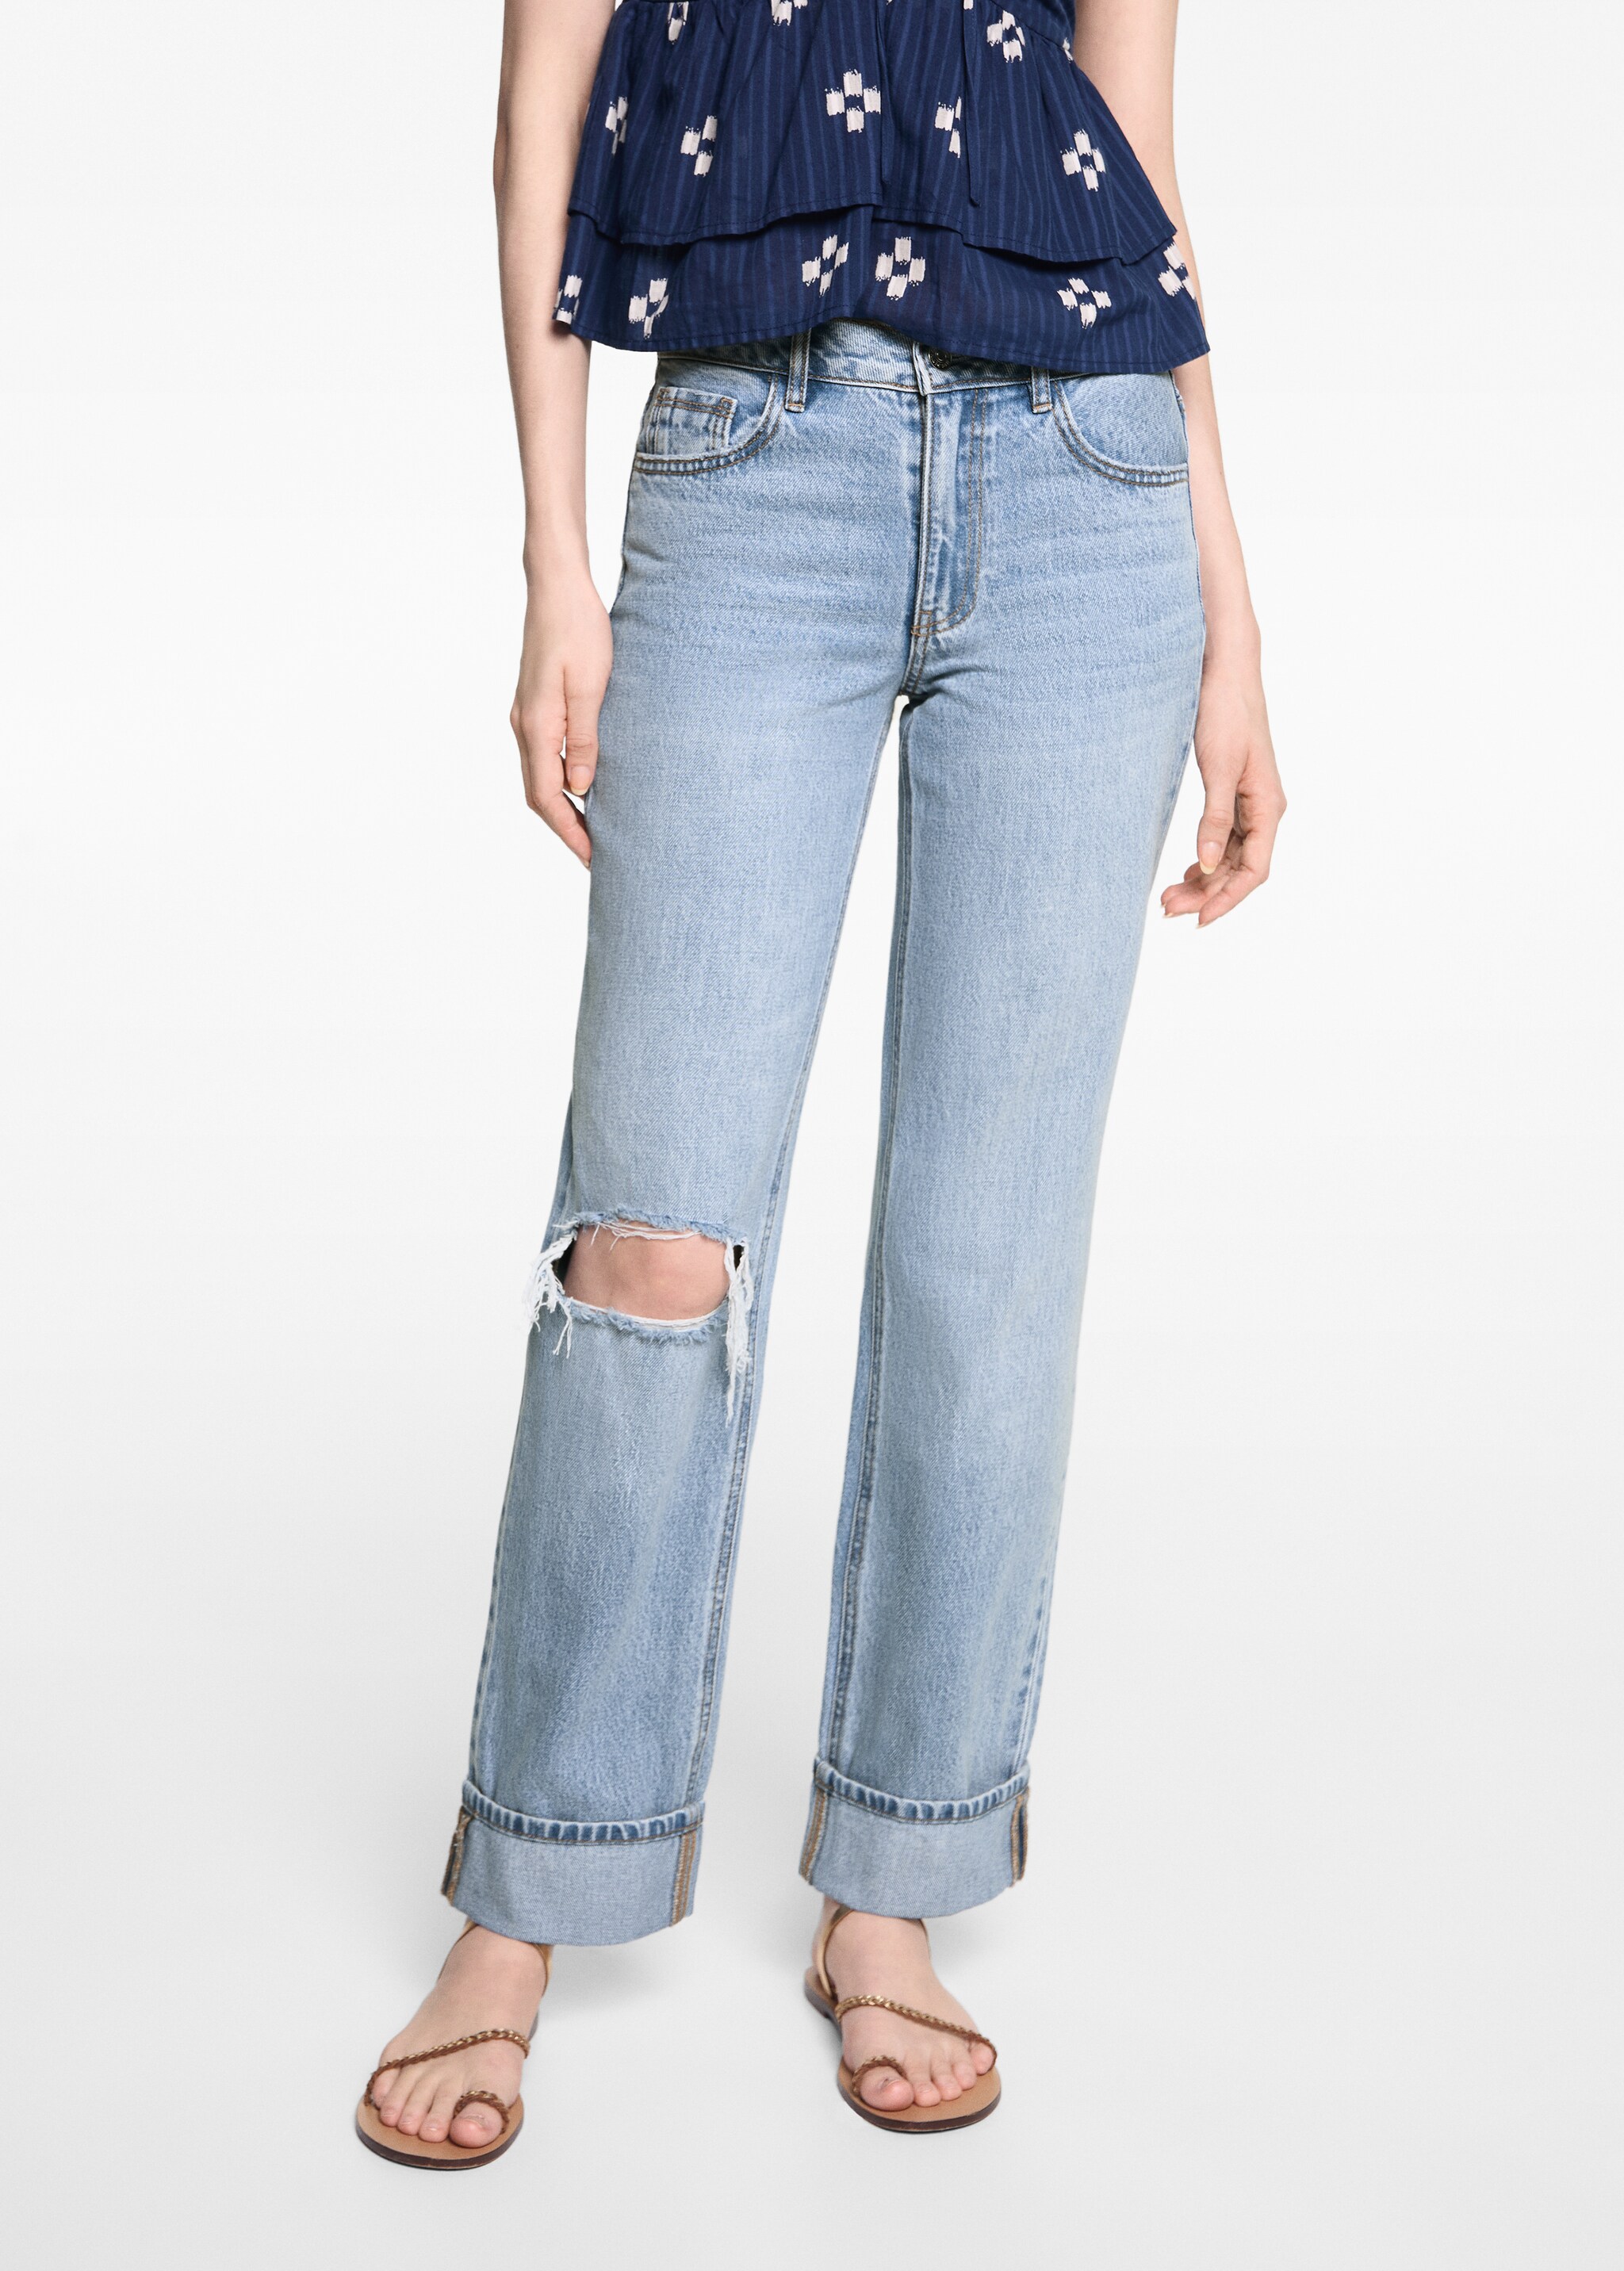 Ripped jeans with turn-up hem - Medium plane